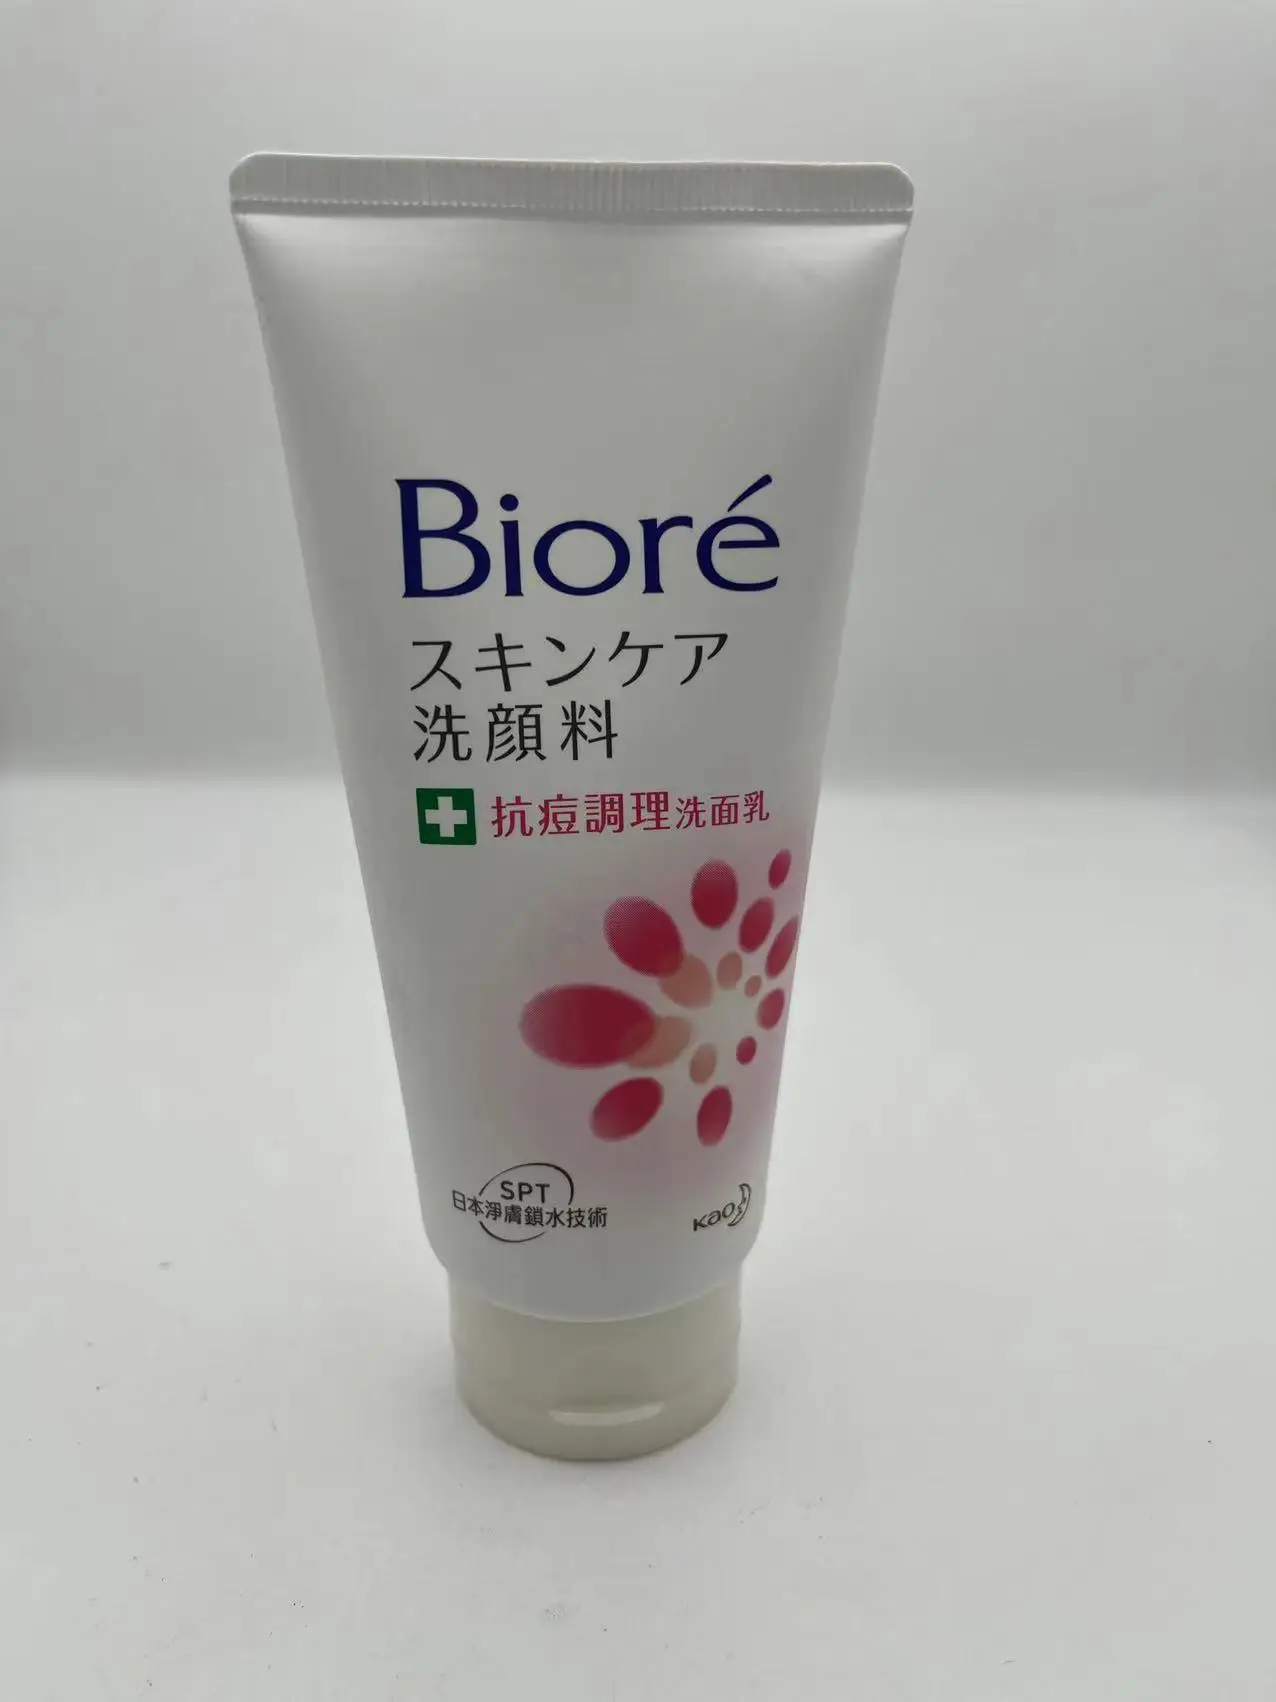 [BIORE] ACNE CONTROL Facial Foam Cleanser Anti-Bacterial Face Wash 100g NEW